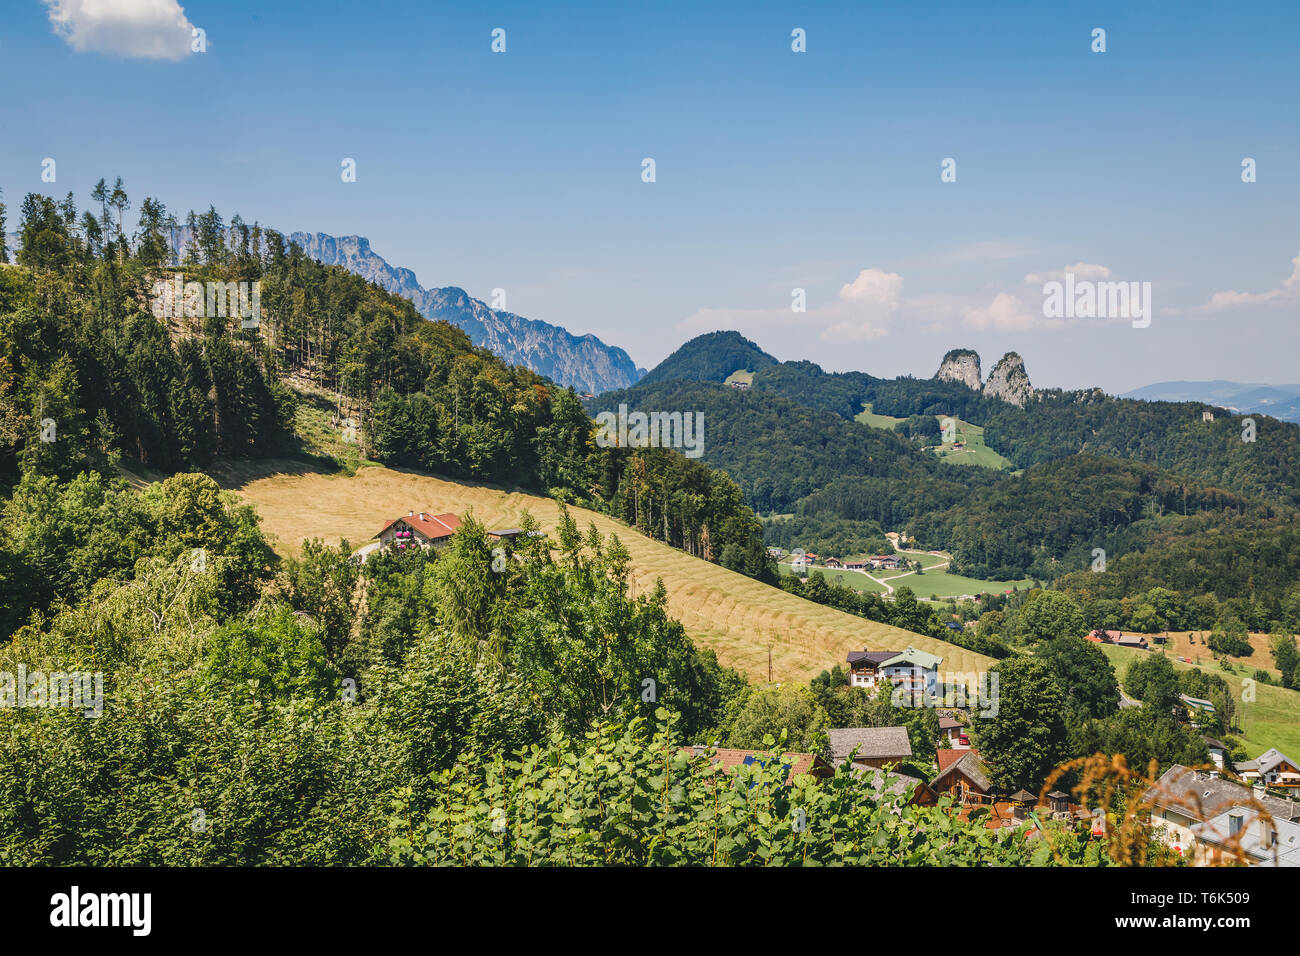 Idyllic mountain scenery in Hallein, Salzburg Stock Photo